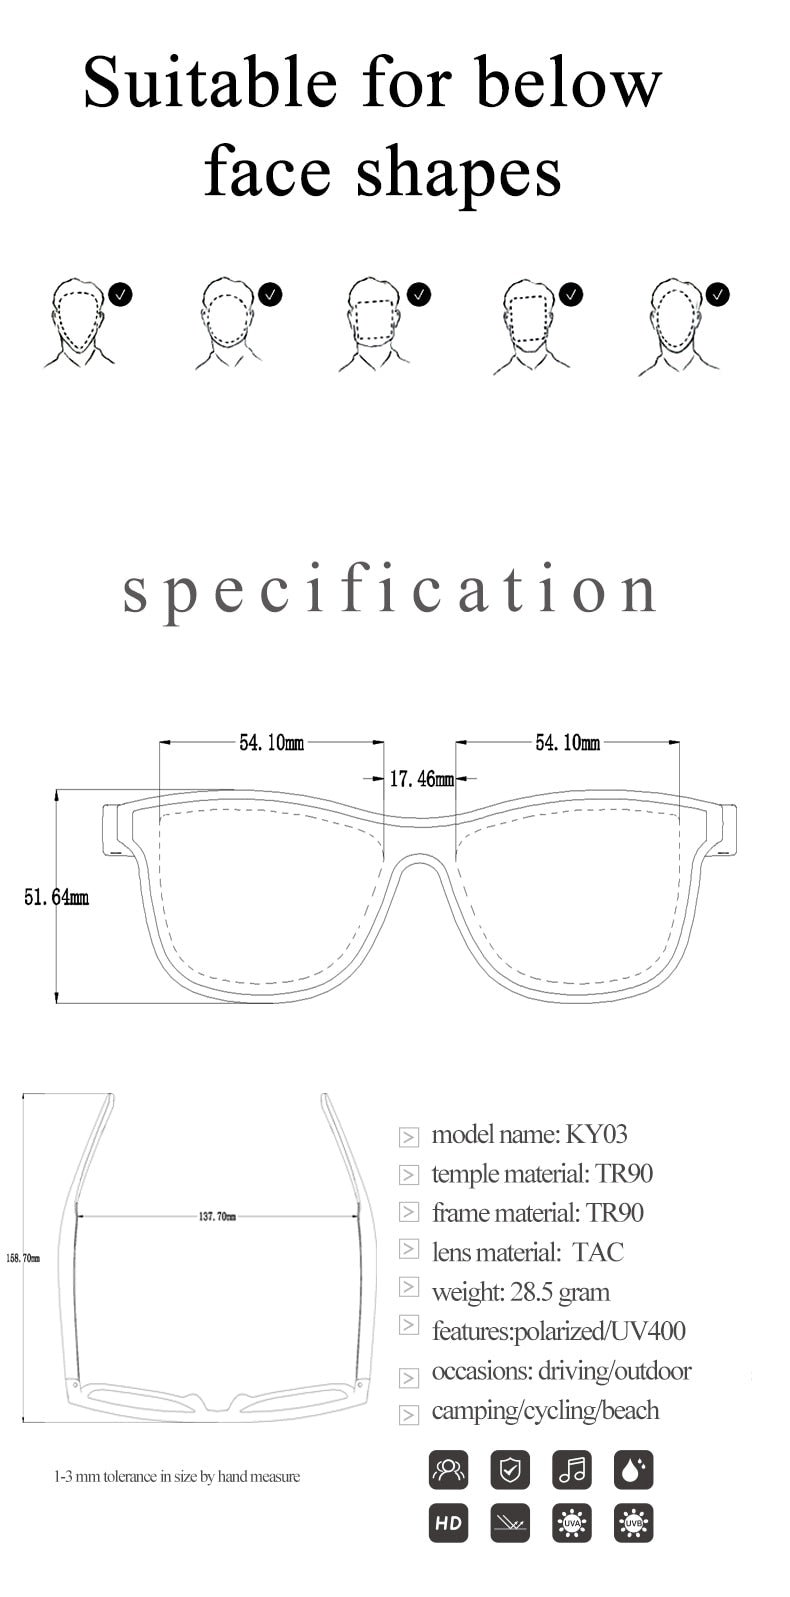 SITOPWEAR 2023 Music Headset Smart Glasses Polarized Sunglasses